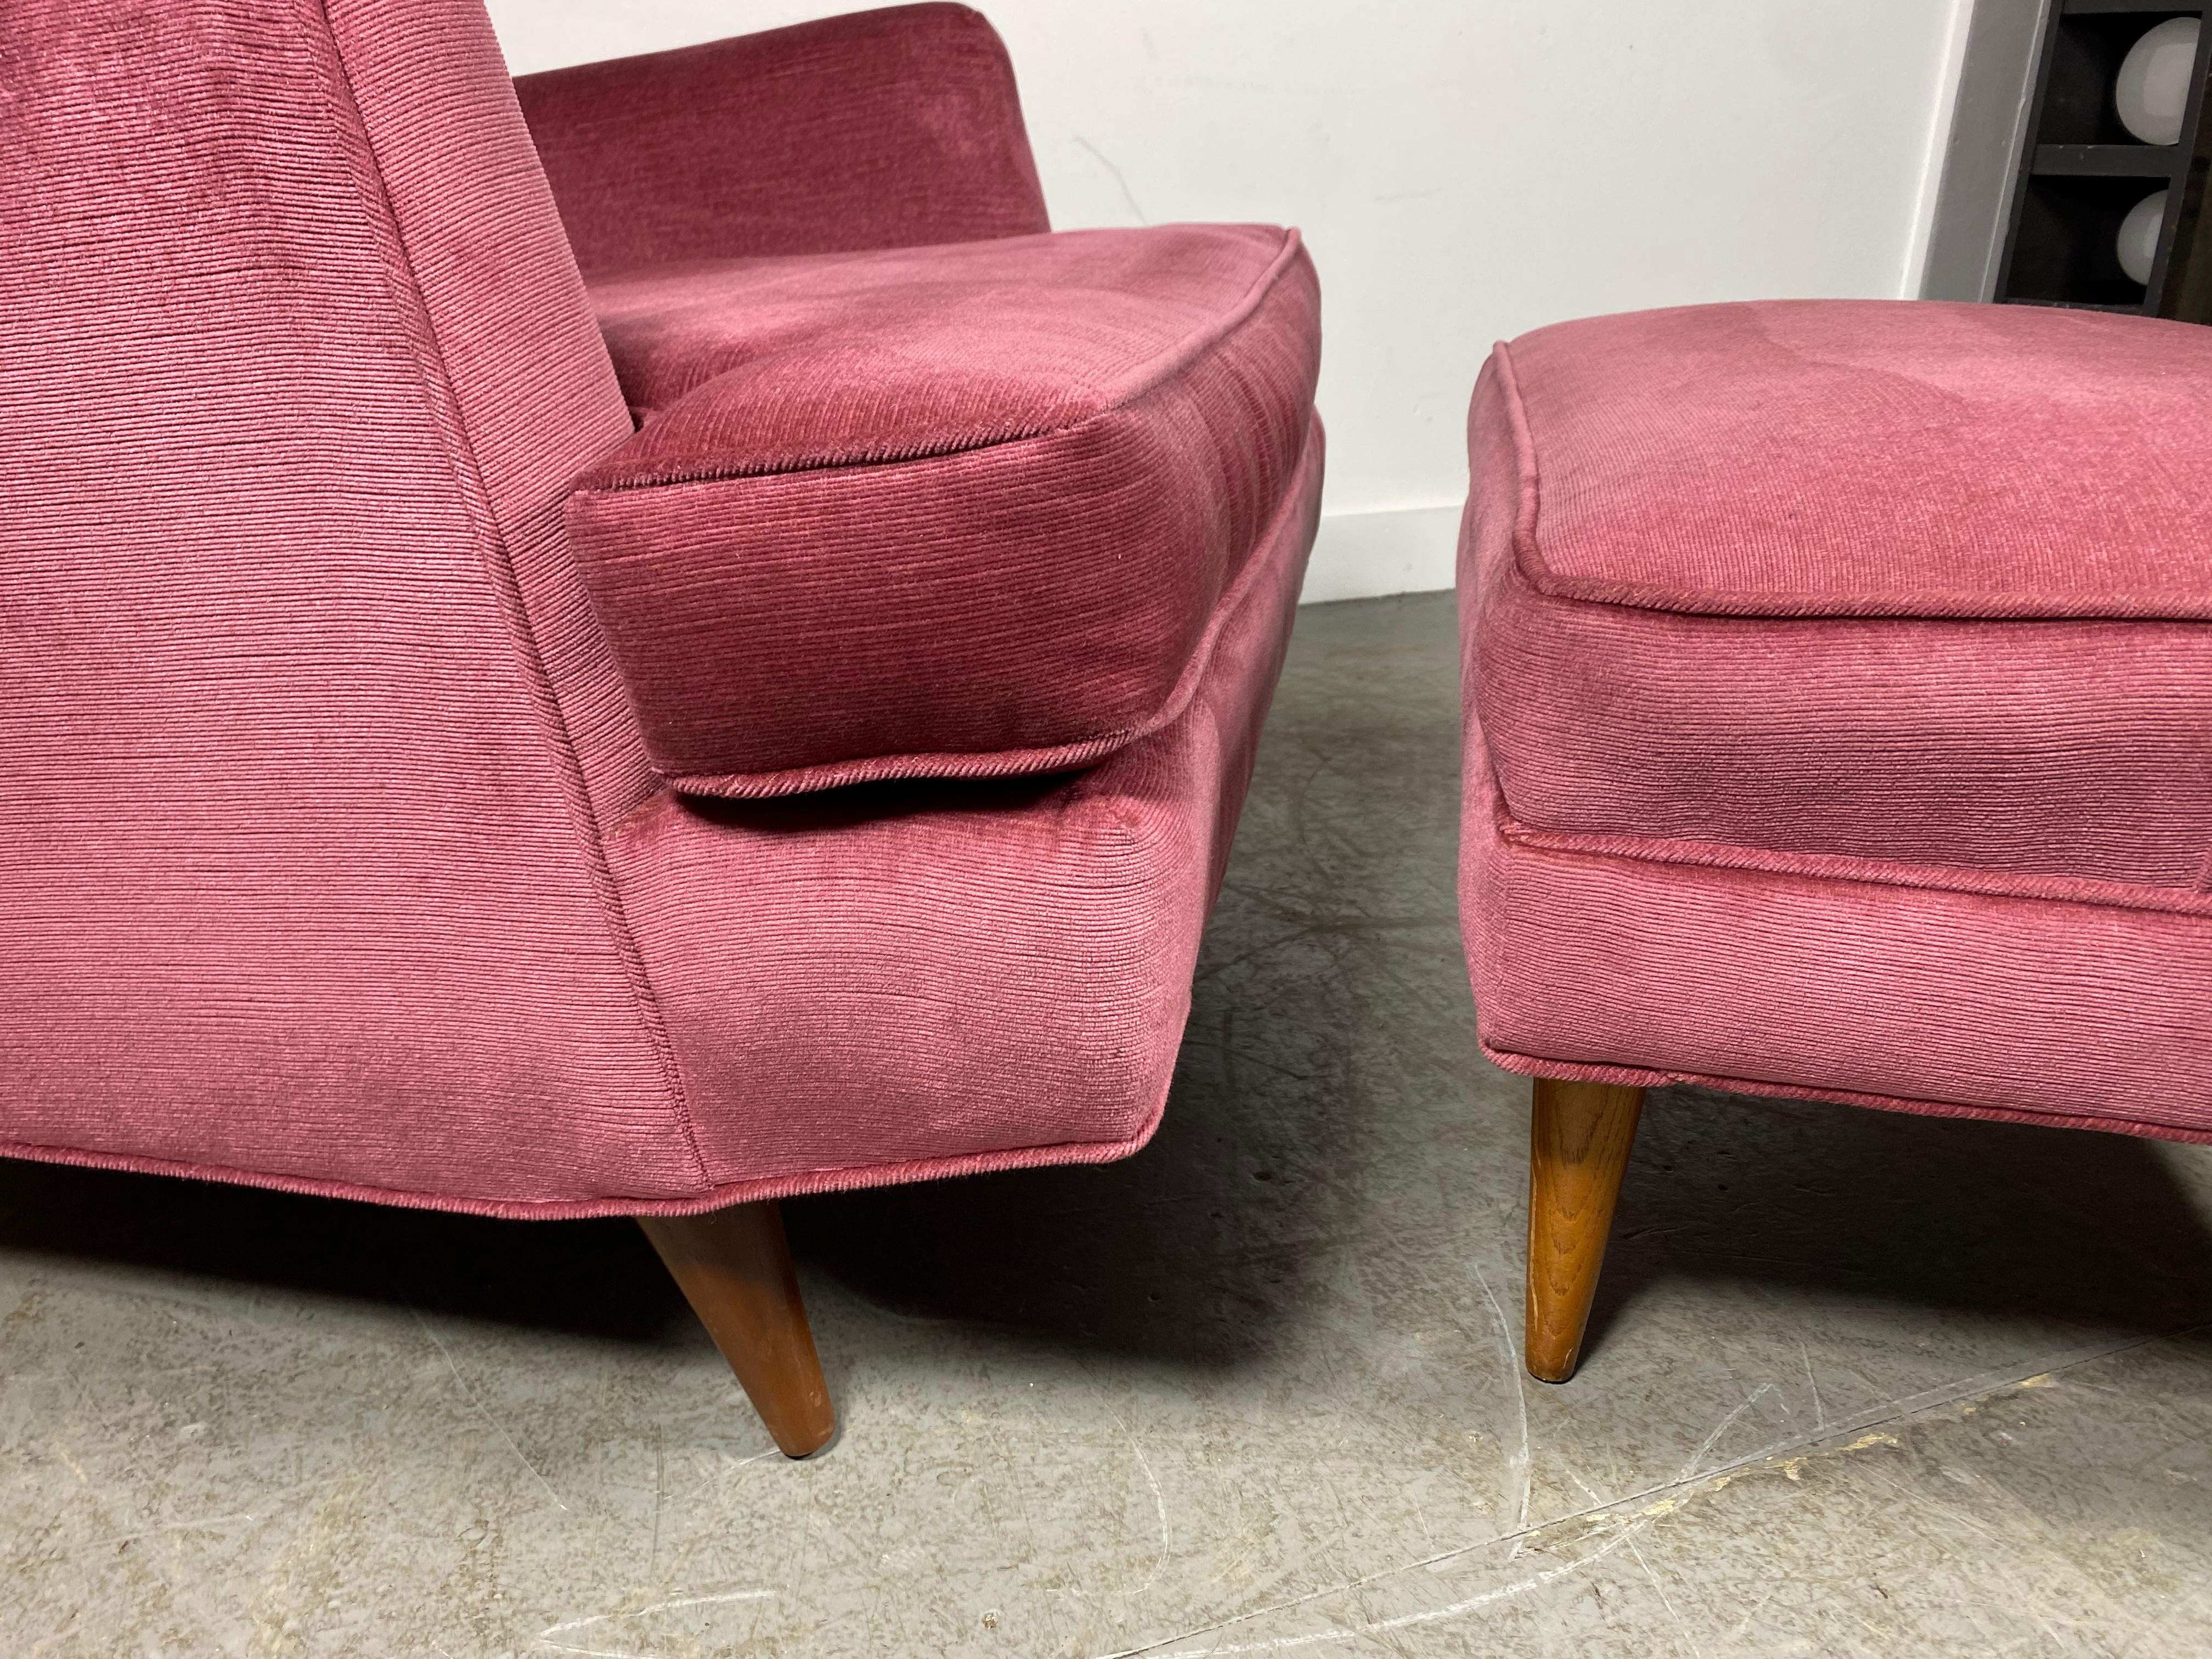 Mid-20th Century Stunning Modernist Lounge Chair & Ott Oman by Roger Springer for Dunbar For Sale